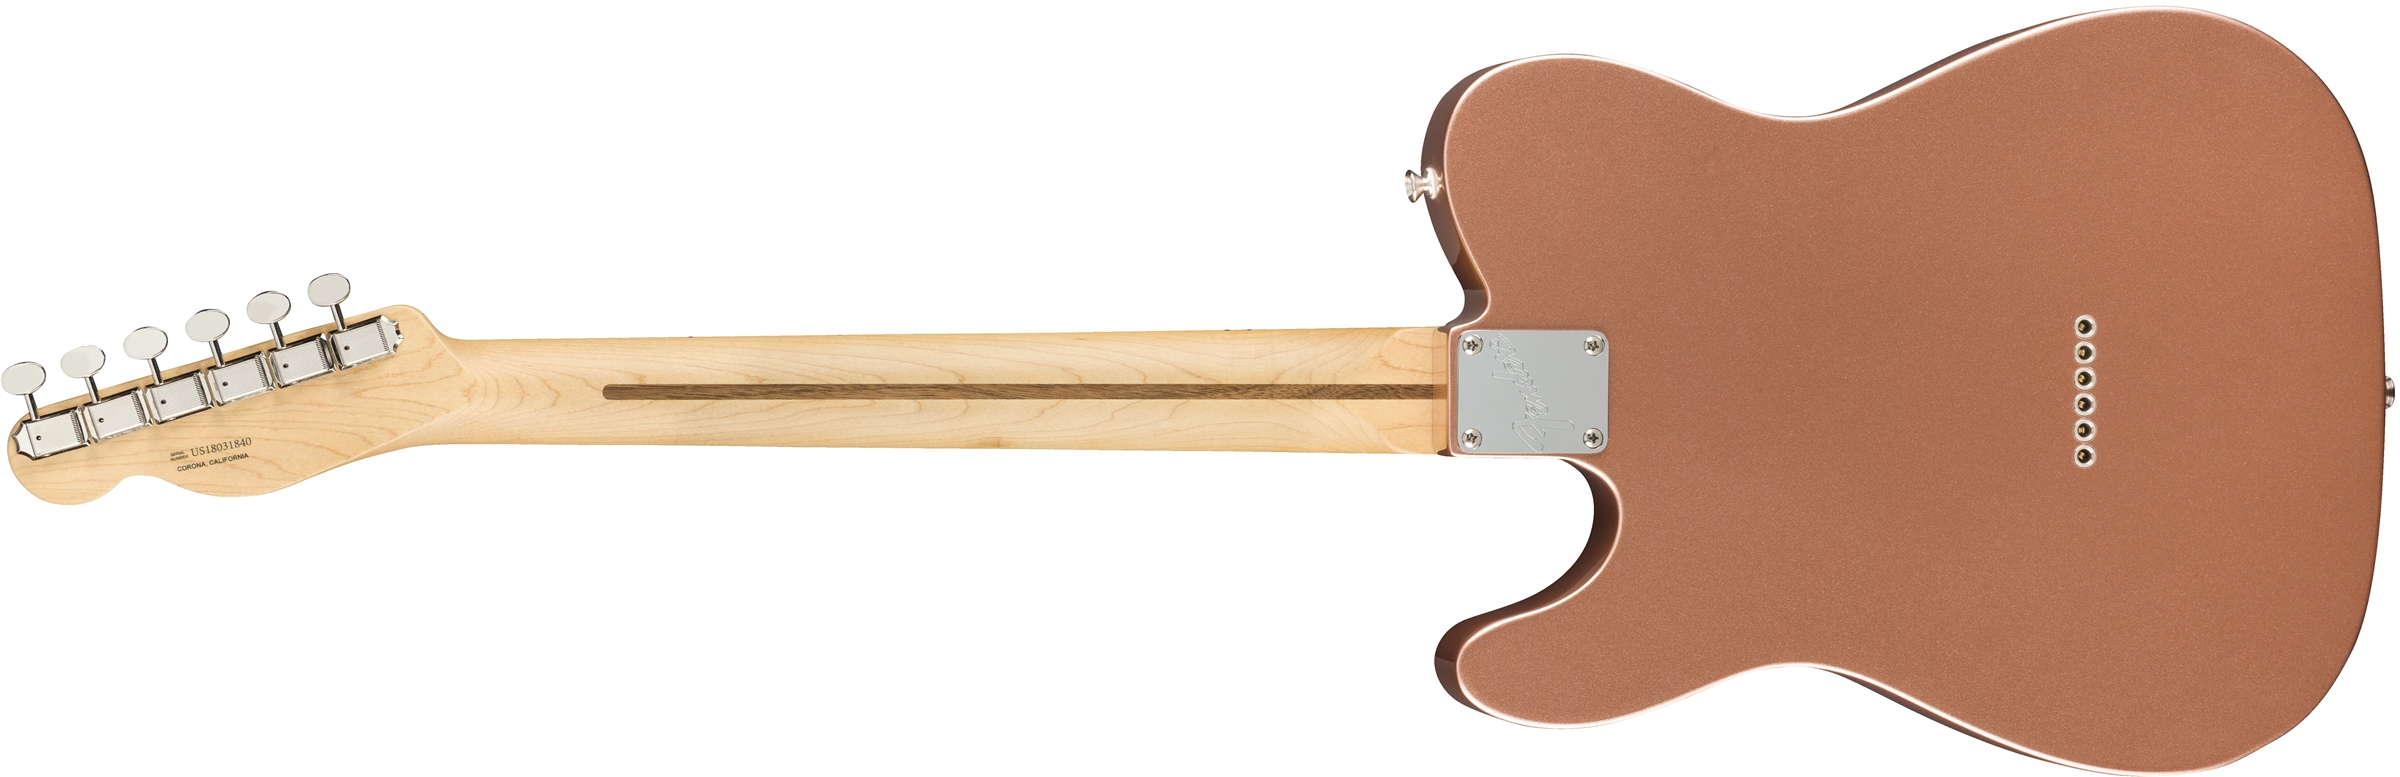 Fender Tele American Performer Usa Mn - Penny - Televorm elektrische gitaar - Variation 1